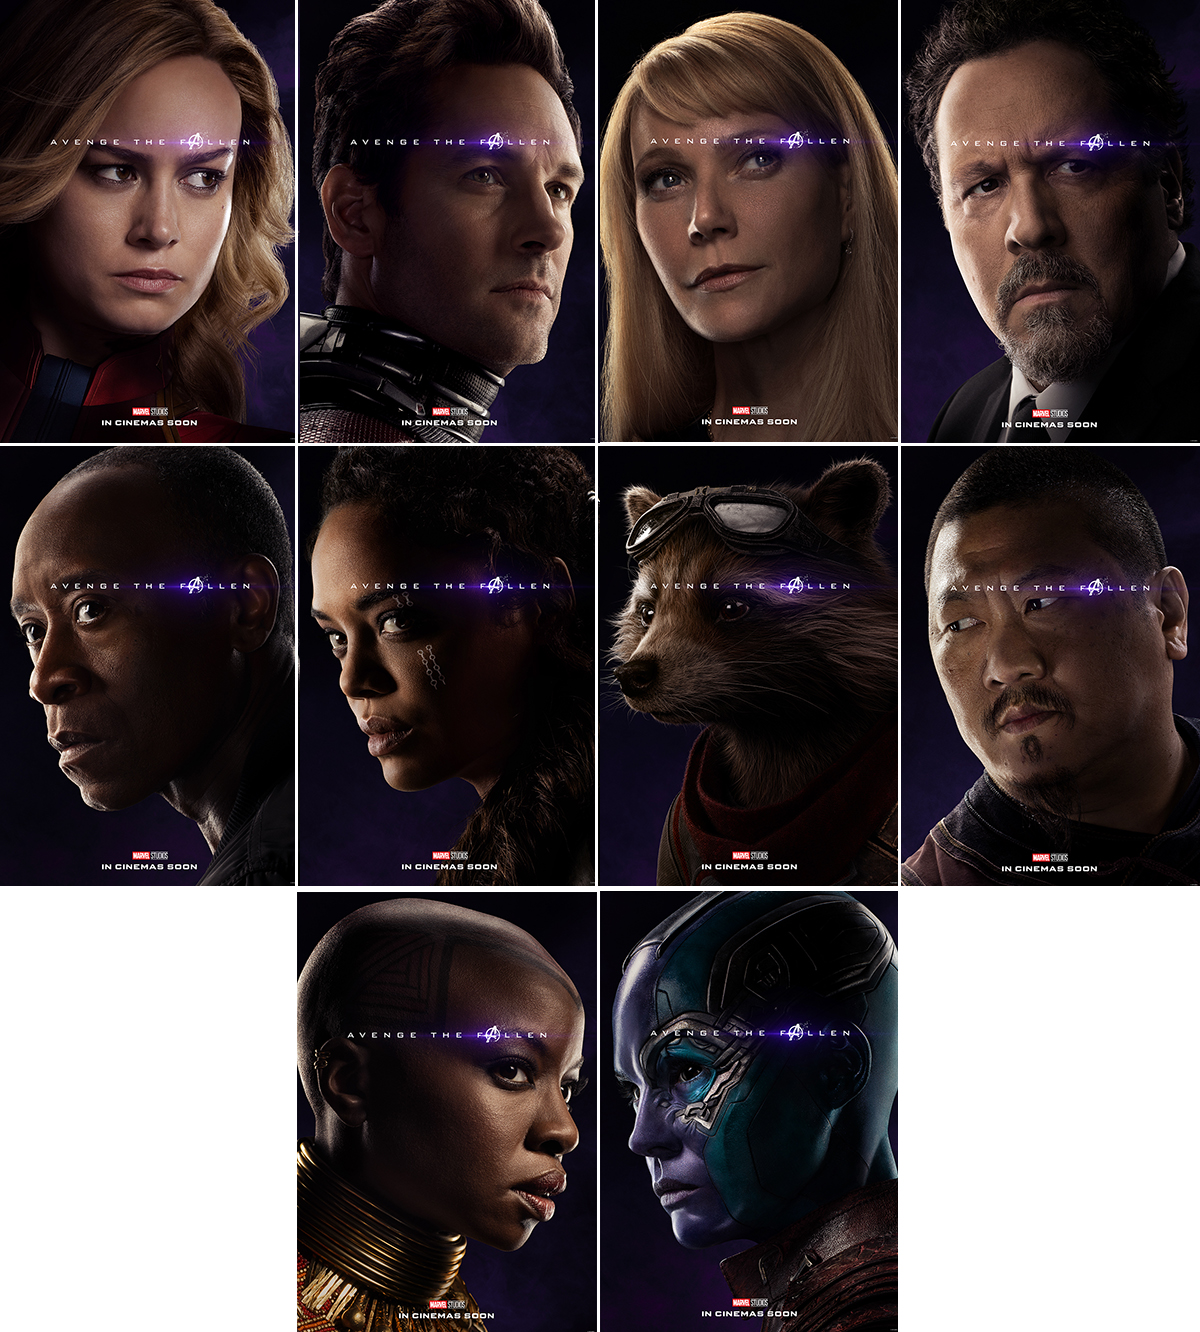 Avengers: Endgame, หนังมาร์เวล, มาร์เวล สตูดิโอ, จักรวาลมาร์เวล